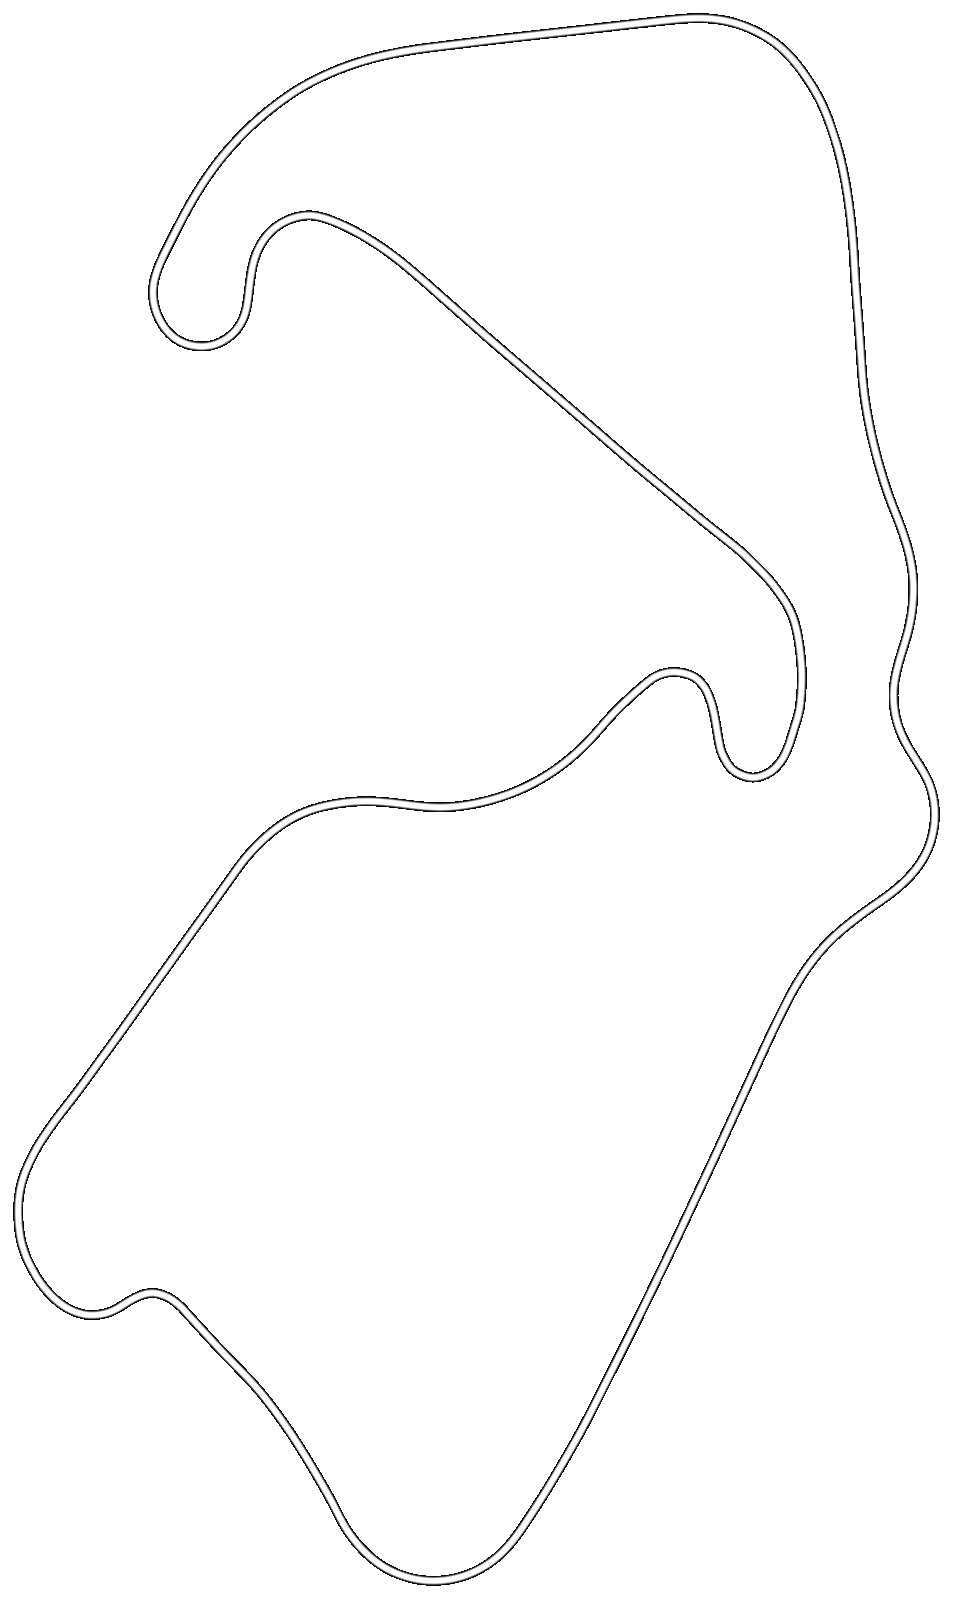 Map of Silverstone GP